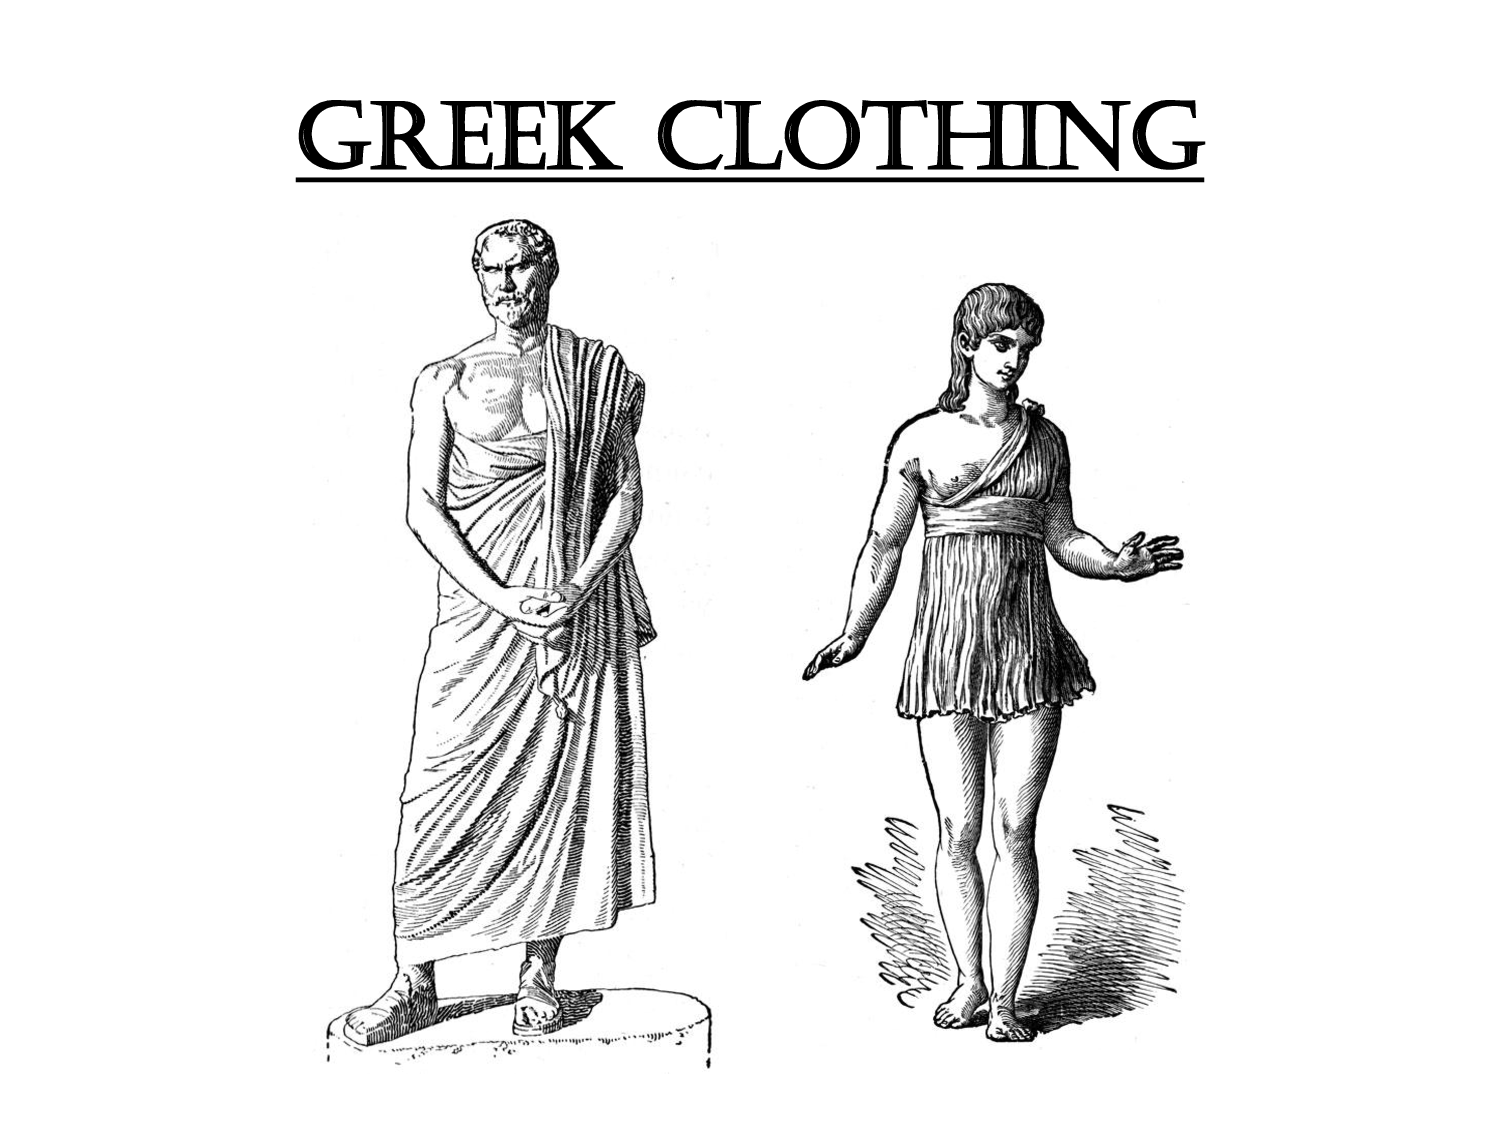 Ancient Roman military clothing - Wikipedia